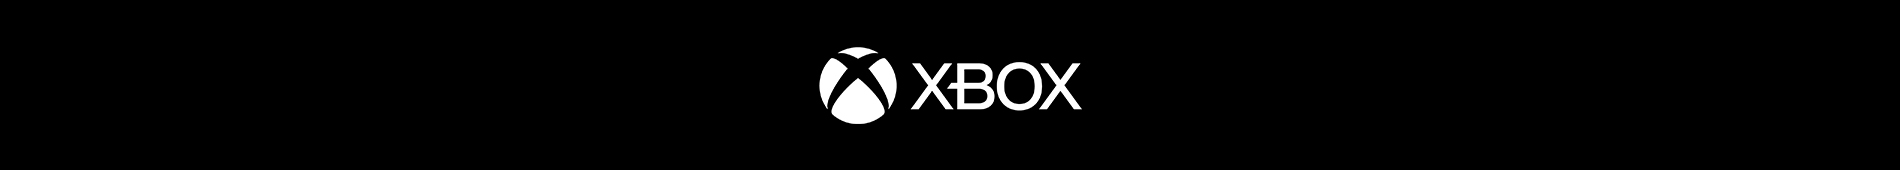 Microsoft Xbox One General Nav Buttons  Btm Banner Tile 15